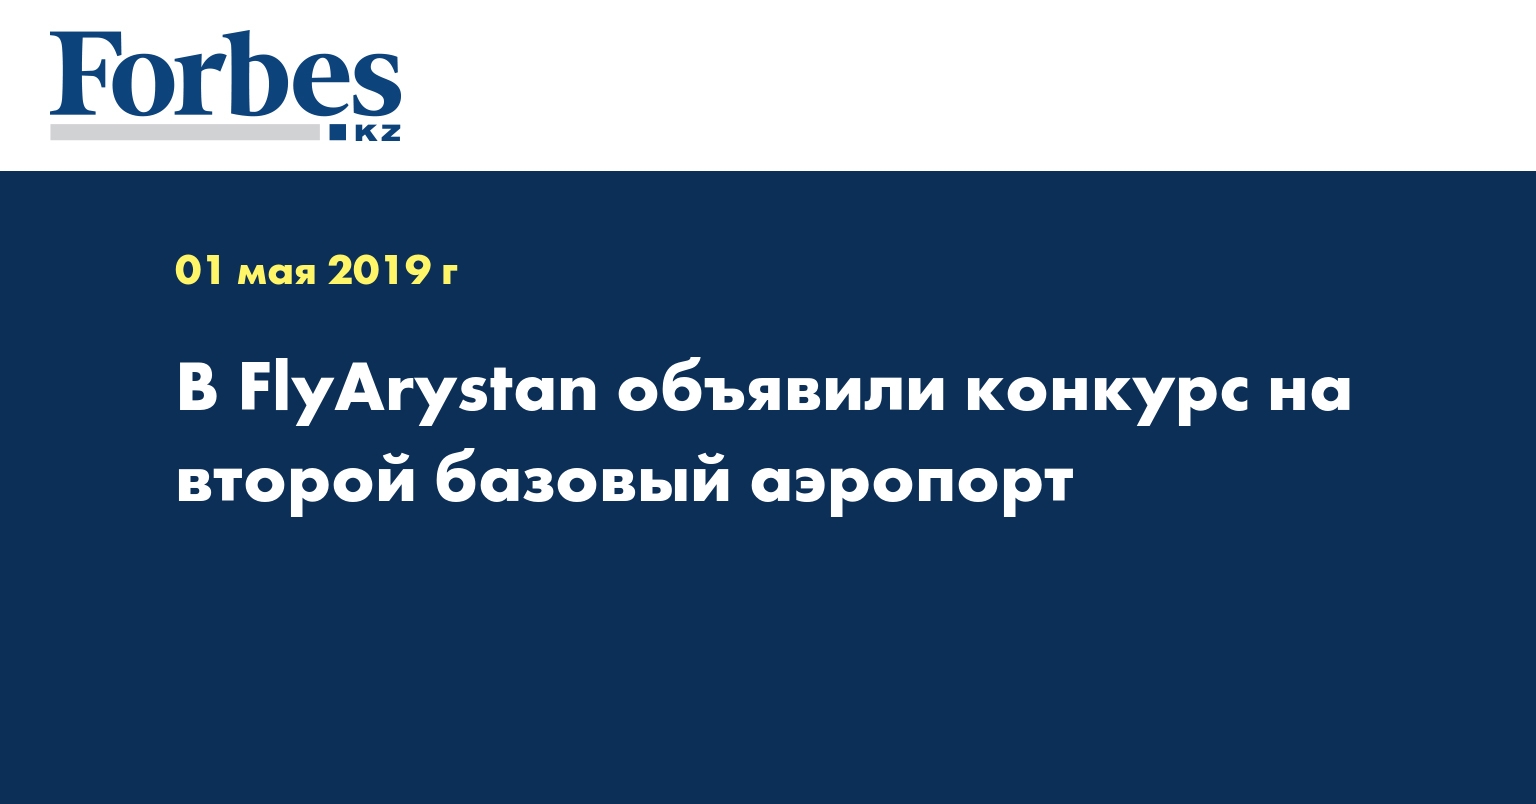 В FlyArystan объявили конкурс на второй базовый аэропорт 